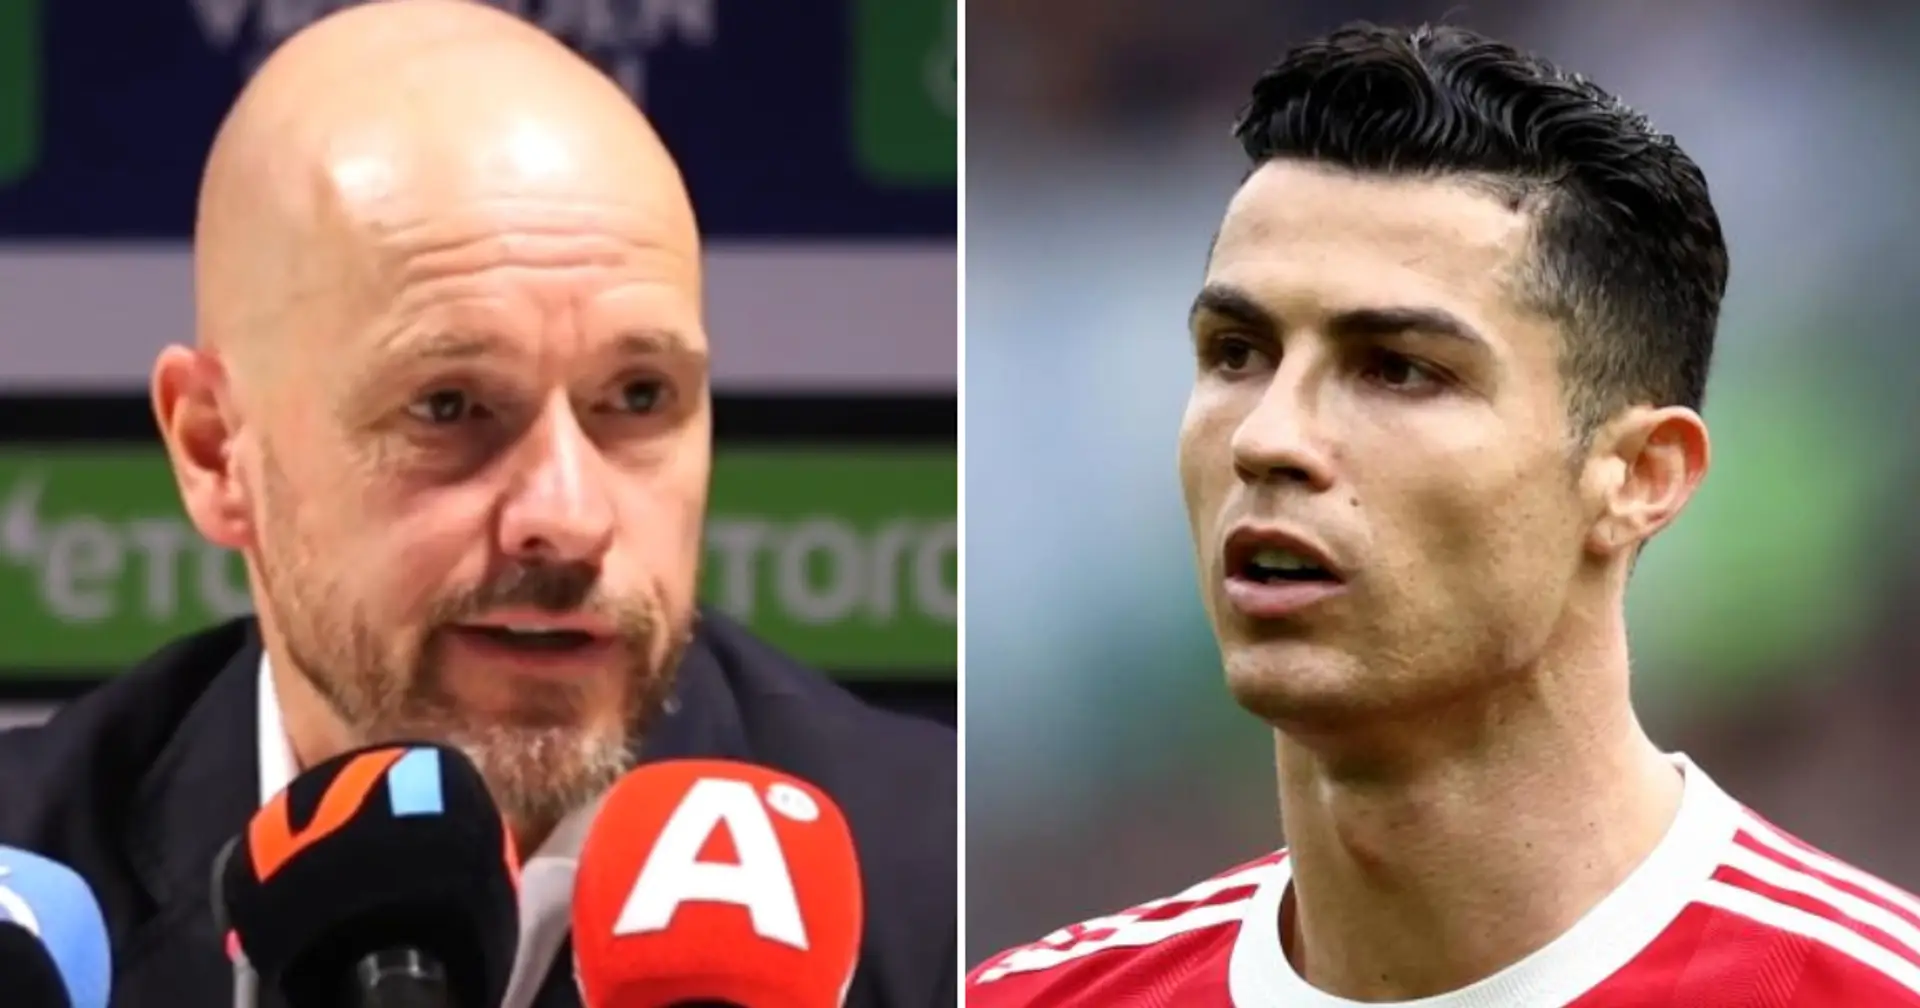 Ten Hag confirms plan for Ronaldo as he turns his focus on Man United job